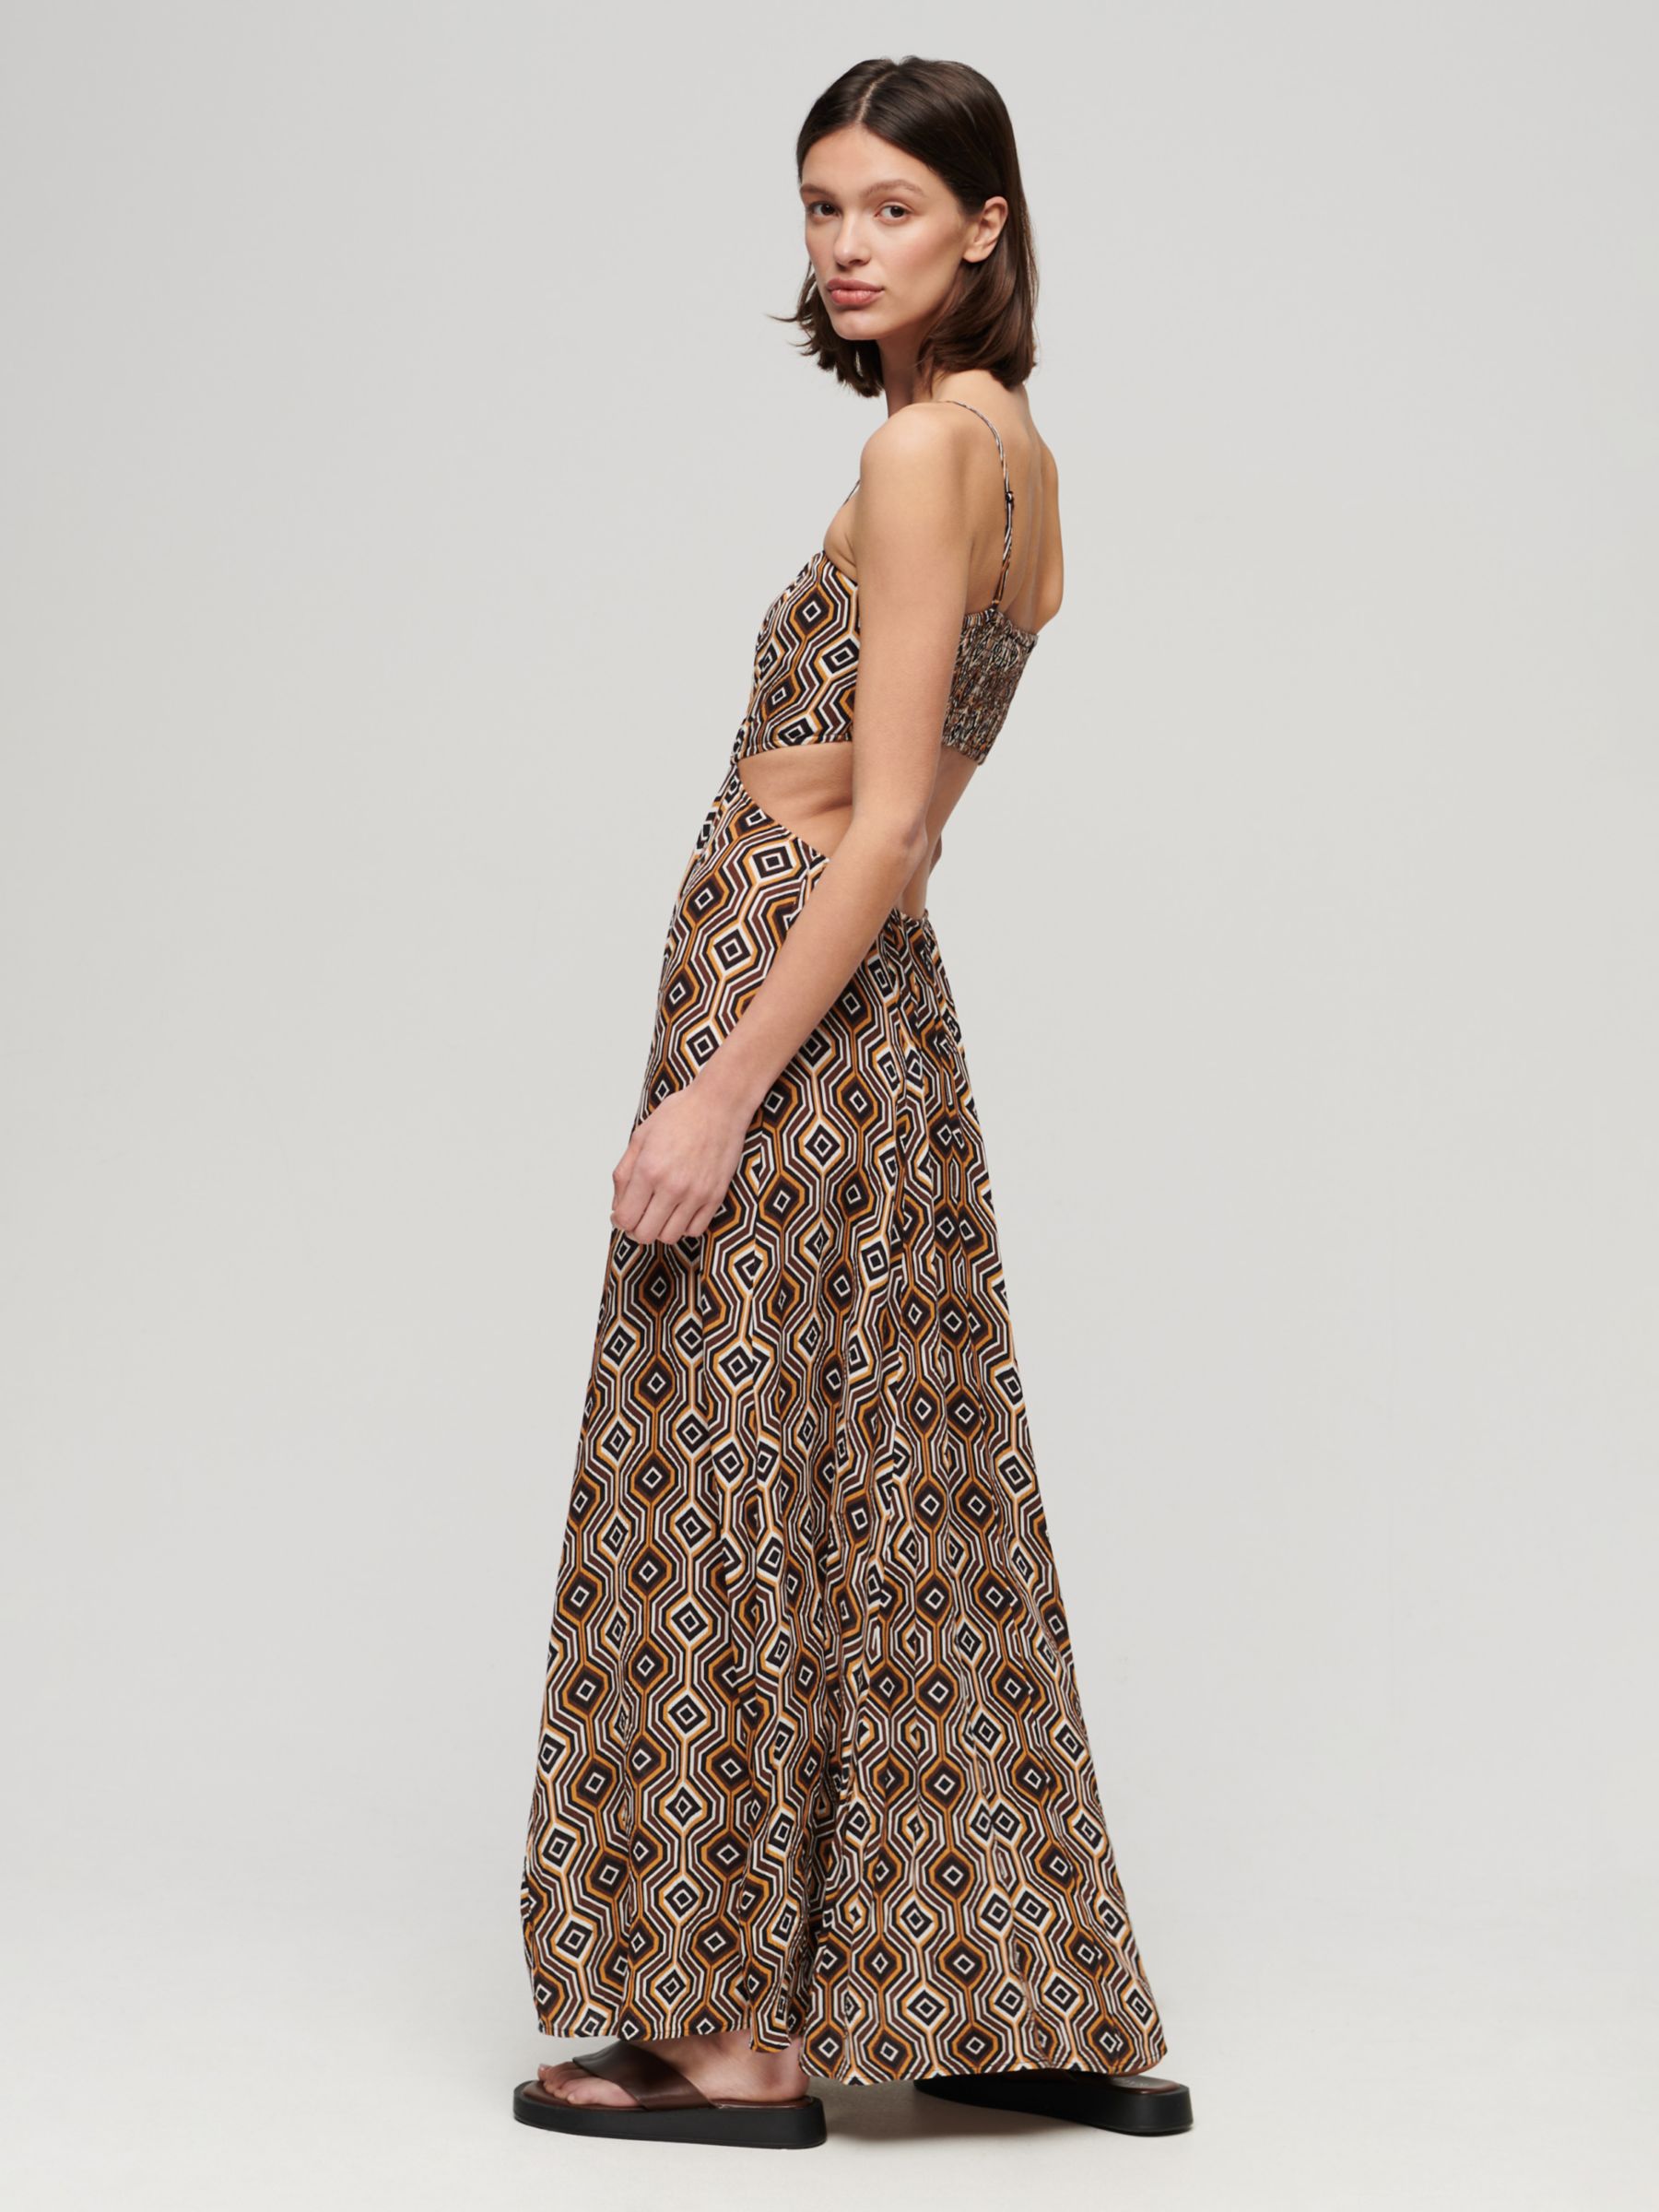 Superdry Sheered Back Geometric Print Maxi Dress, Brown/Multi, 12